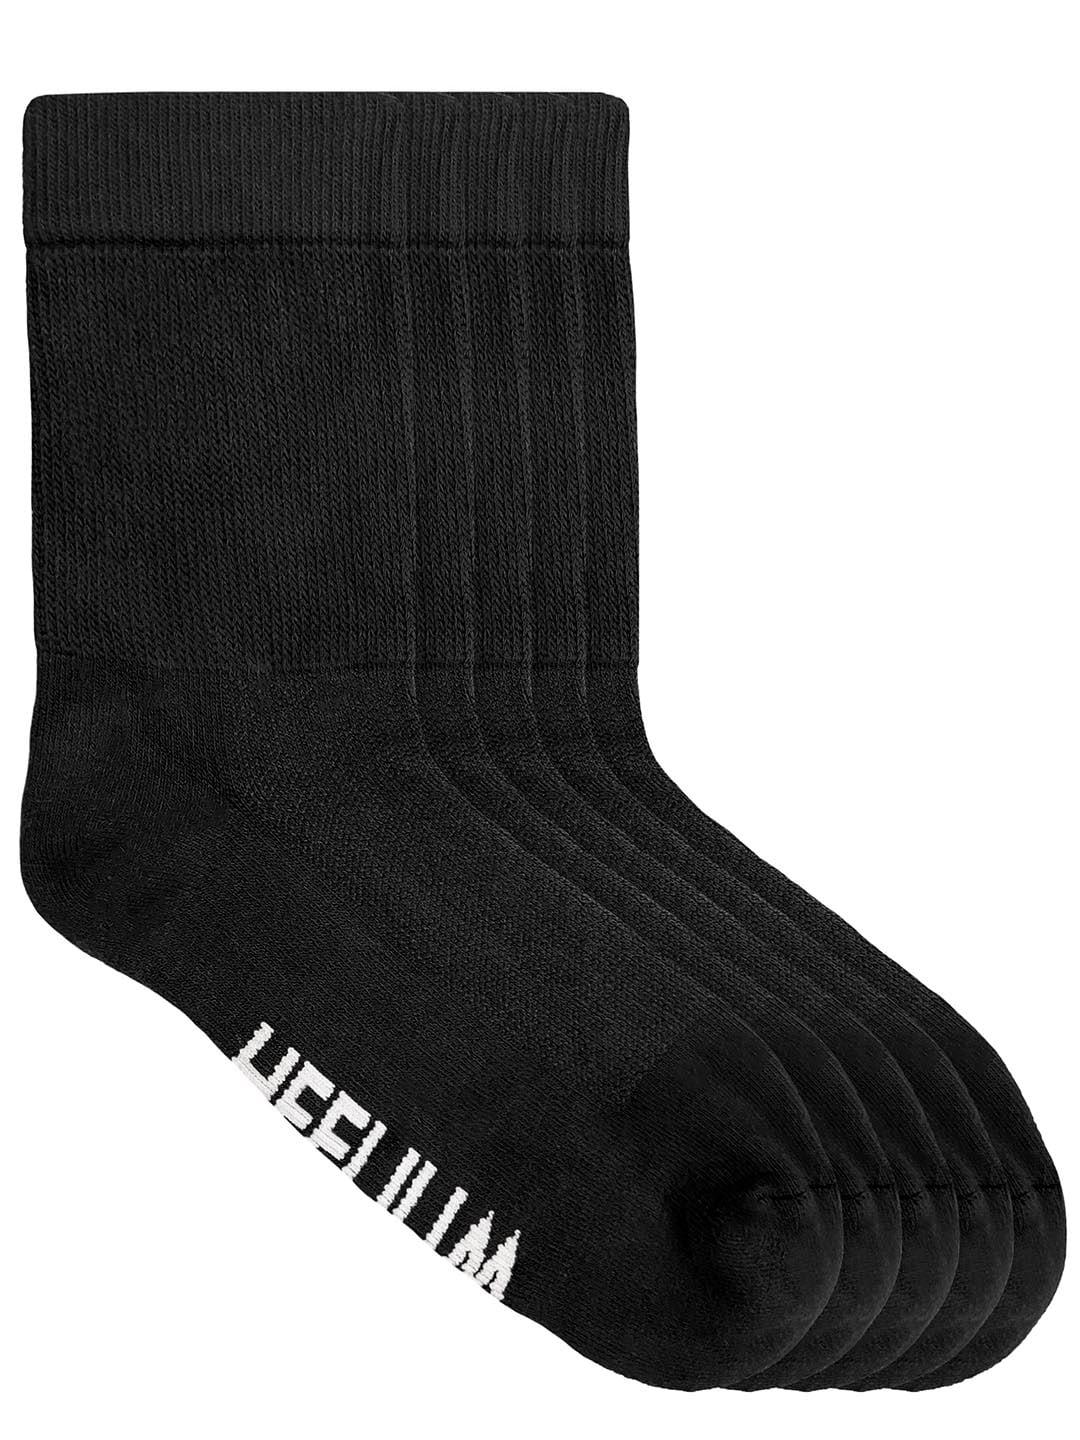 heelium-unisex-black-pack-of-5-calf-length-socks